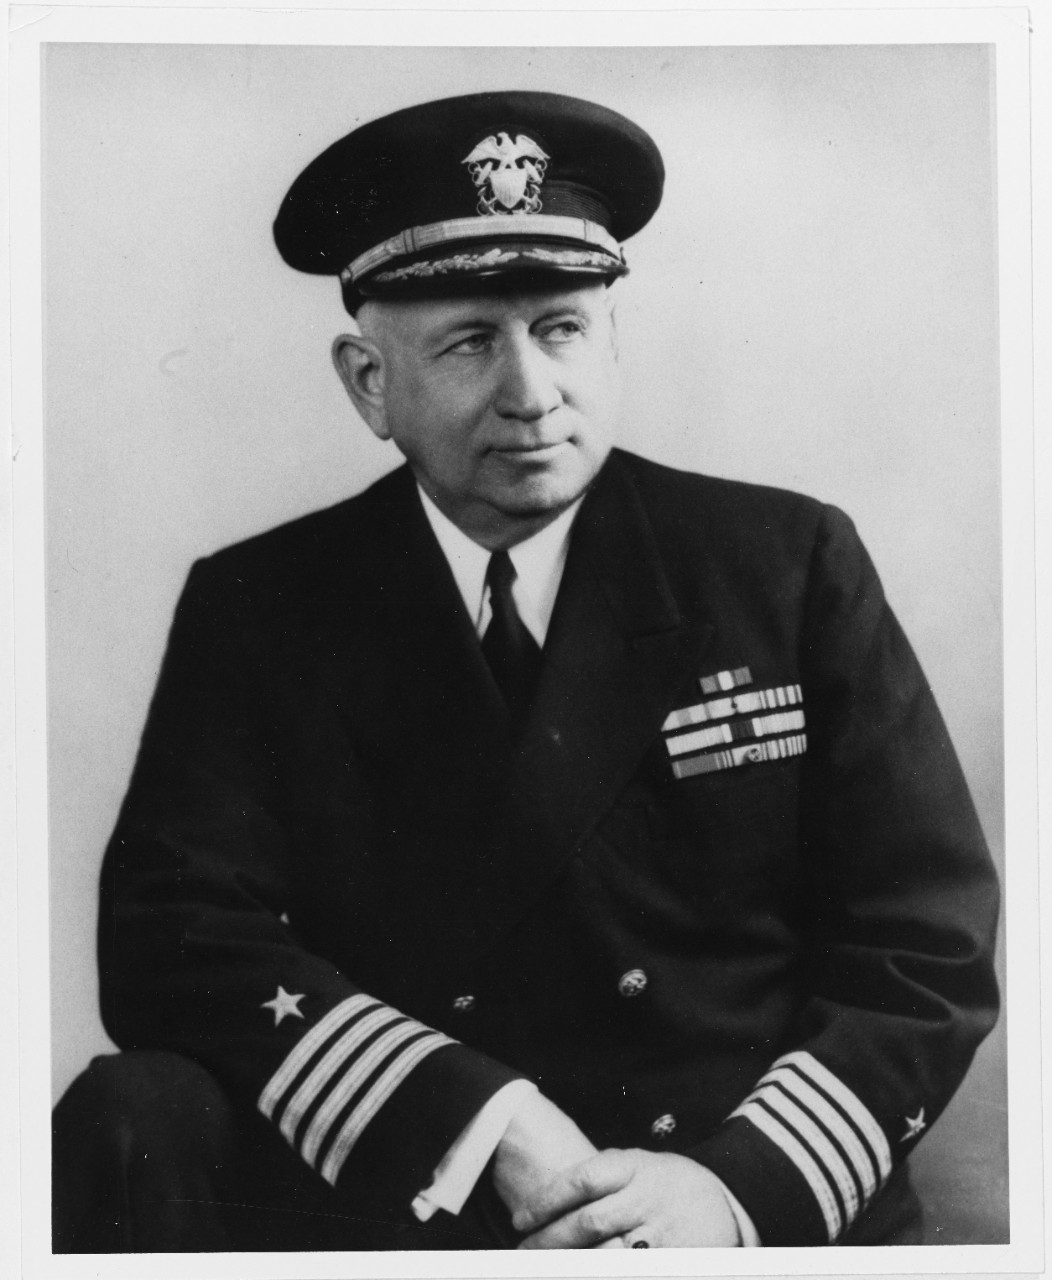 Captain Harry L. Pence, USN (ret)